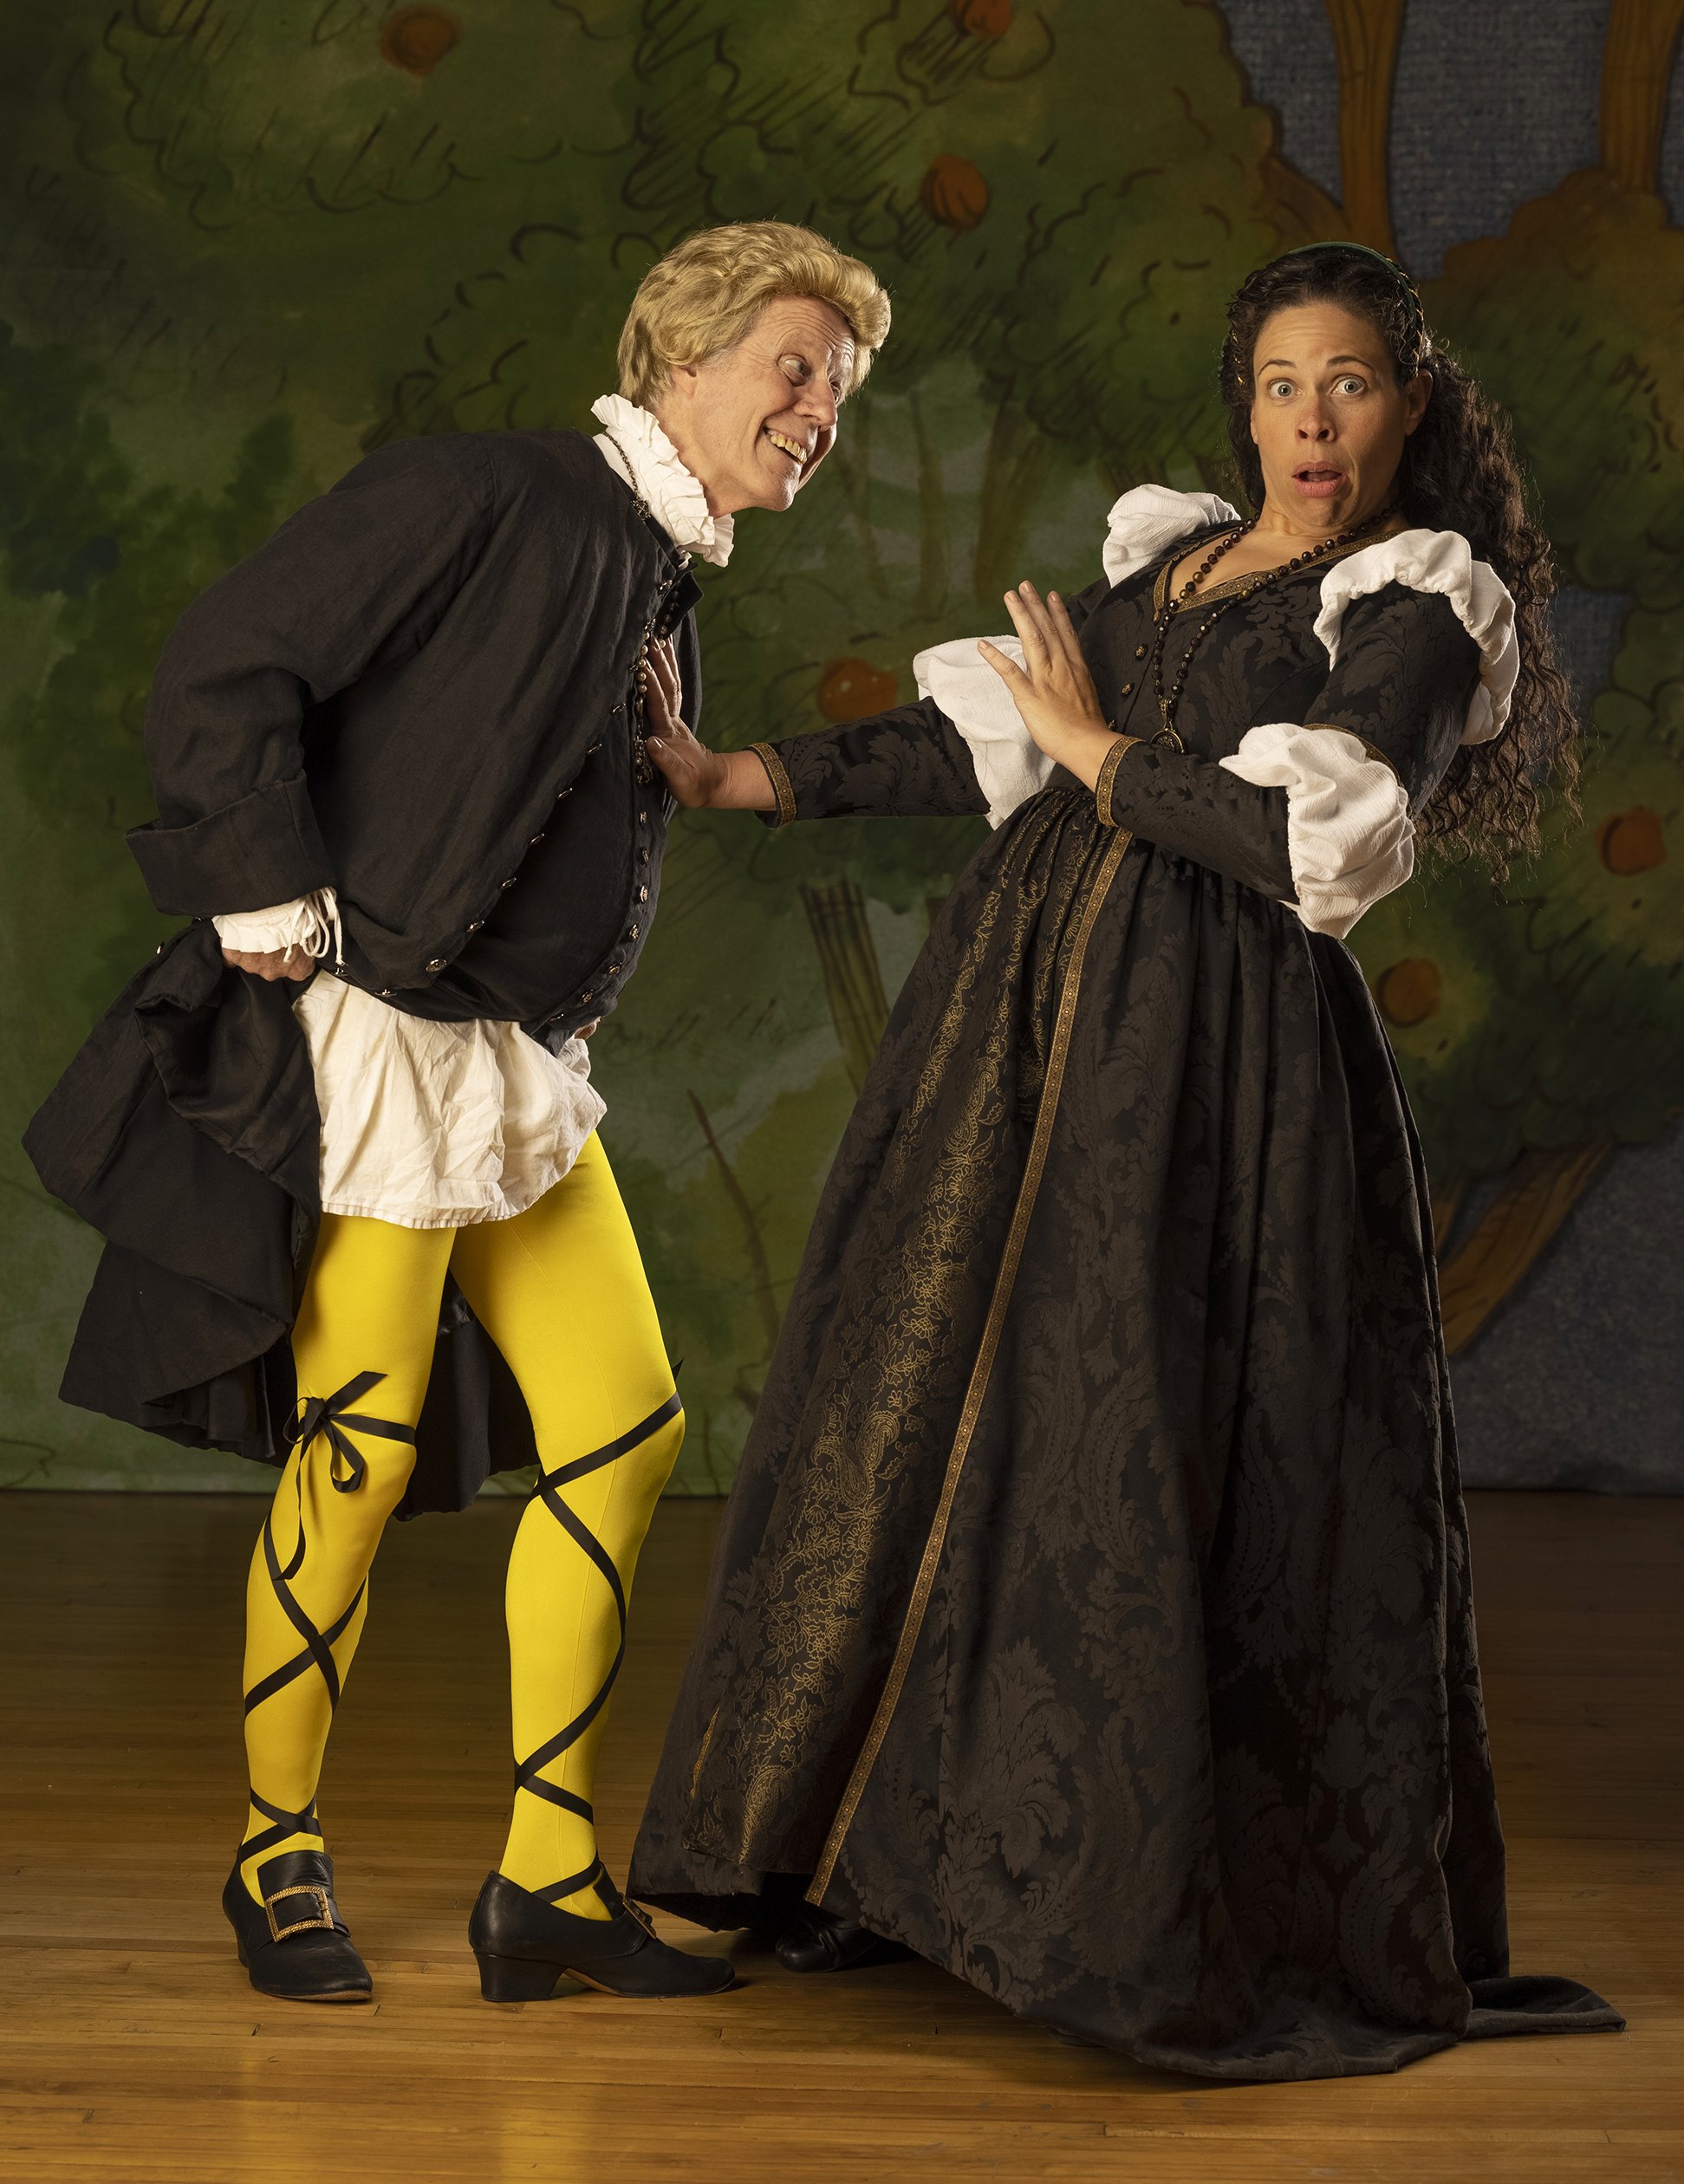 Joseph McGrath as Malvolio and Carley Elizabeth Preston as Olivia in Twelfth Night. Photo by Tim Fuller.